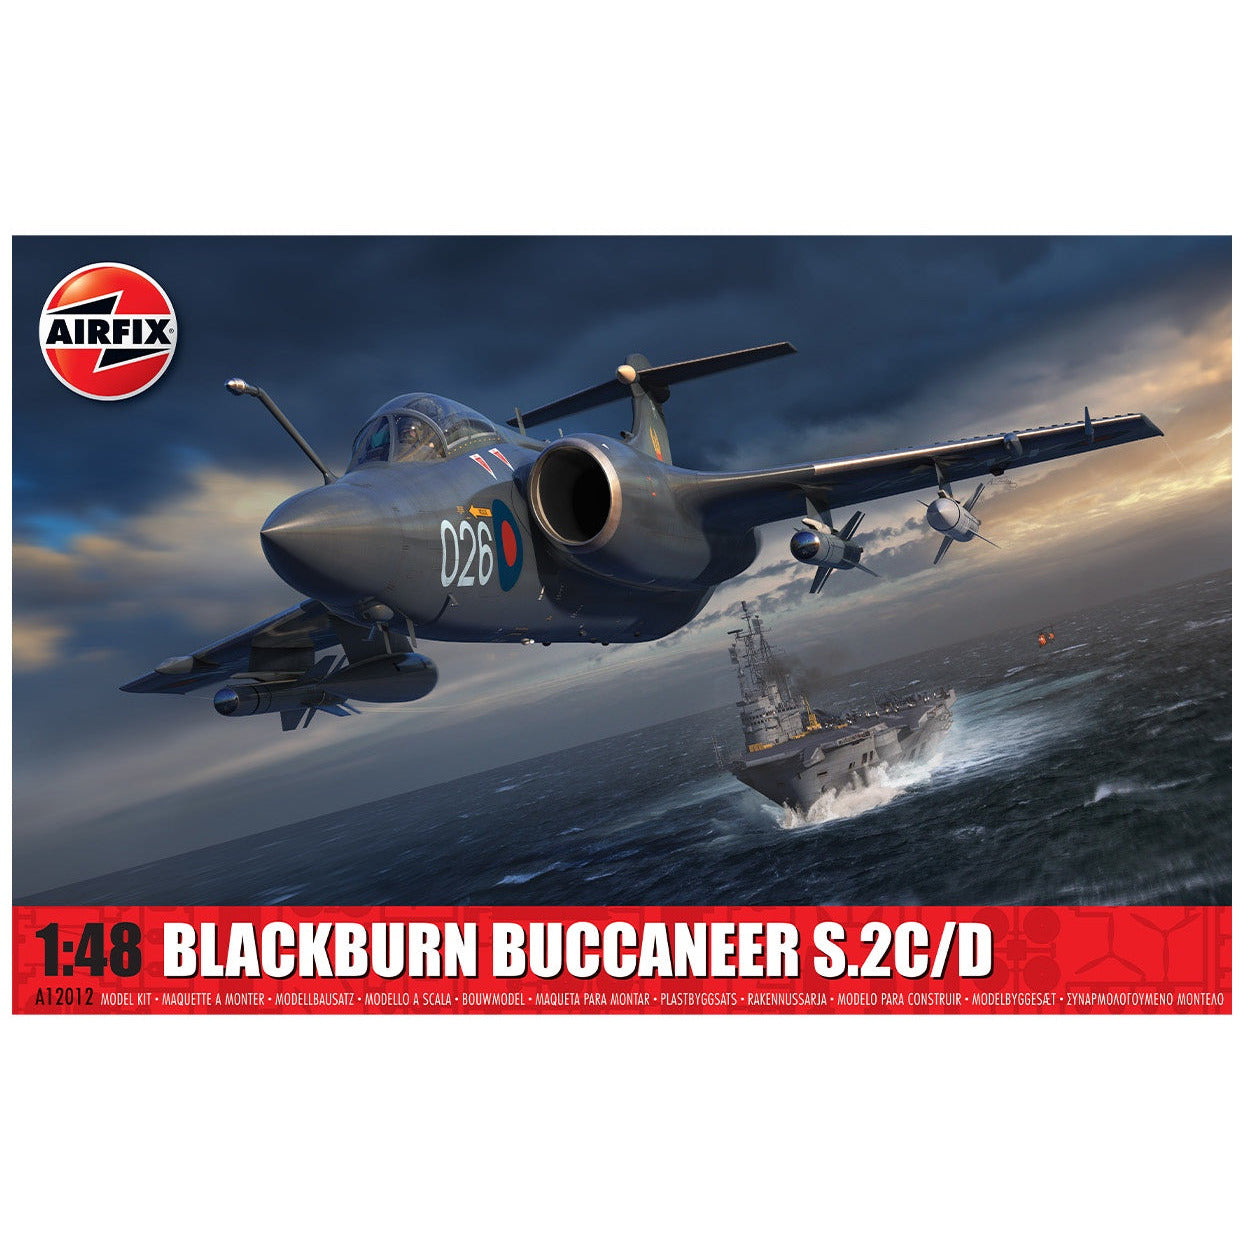 Blackburn Buccaneer S.2 1/48 #12012 by Airfix